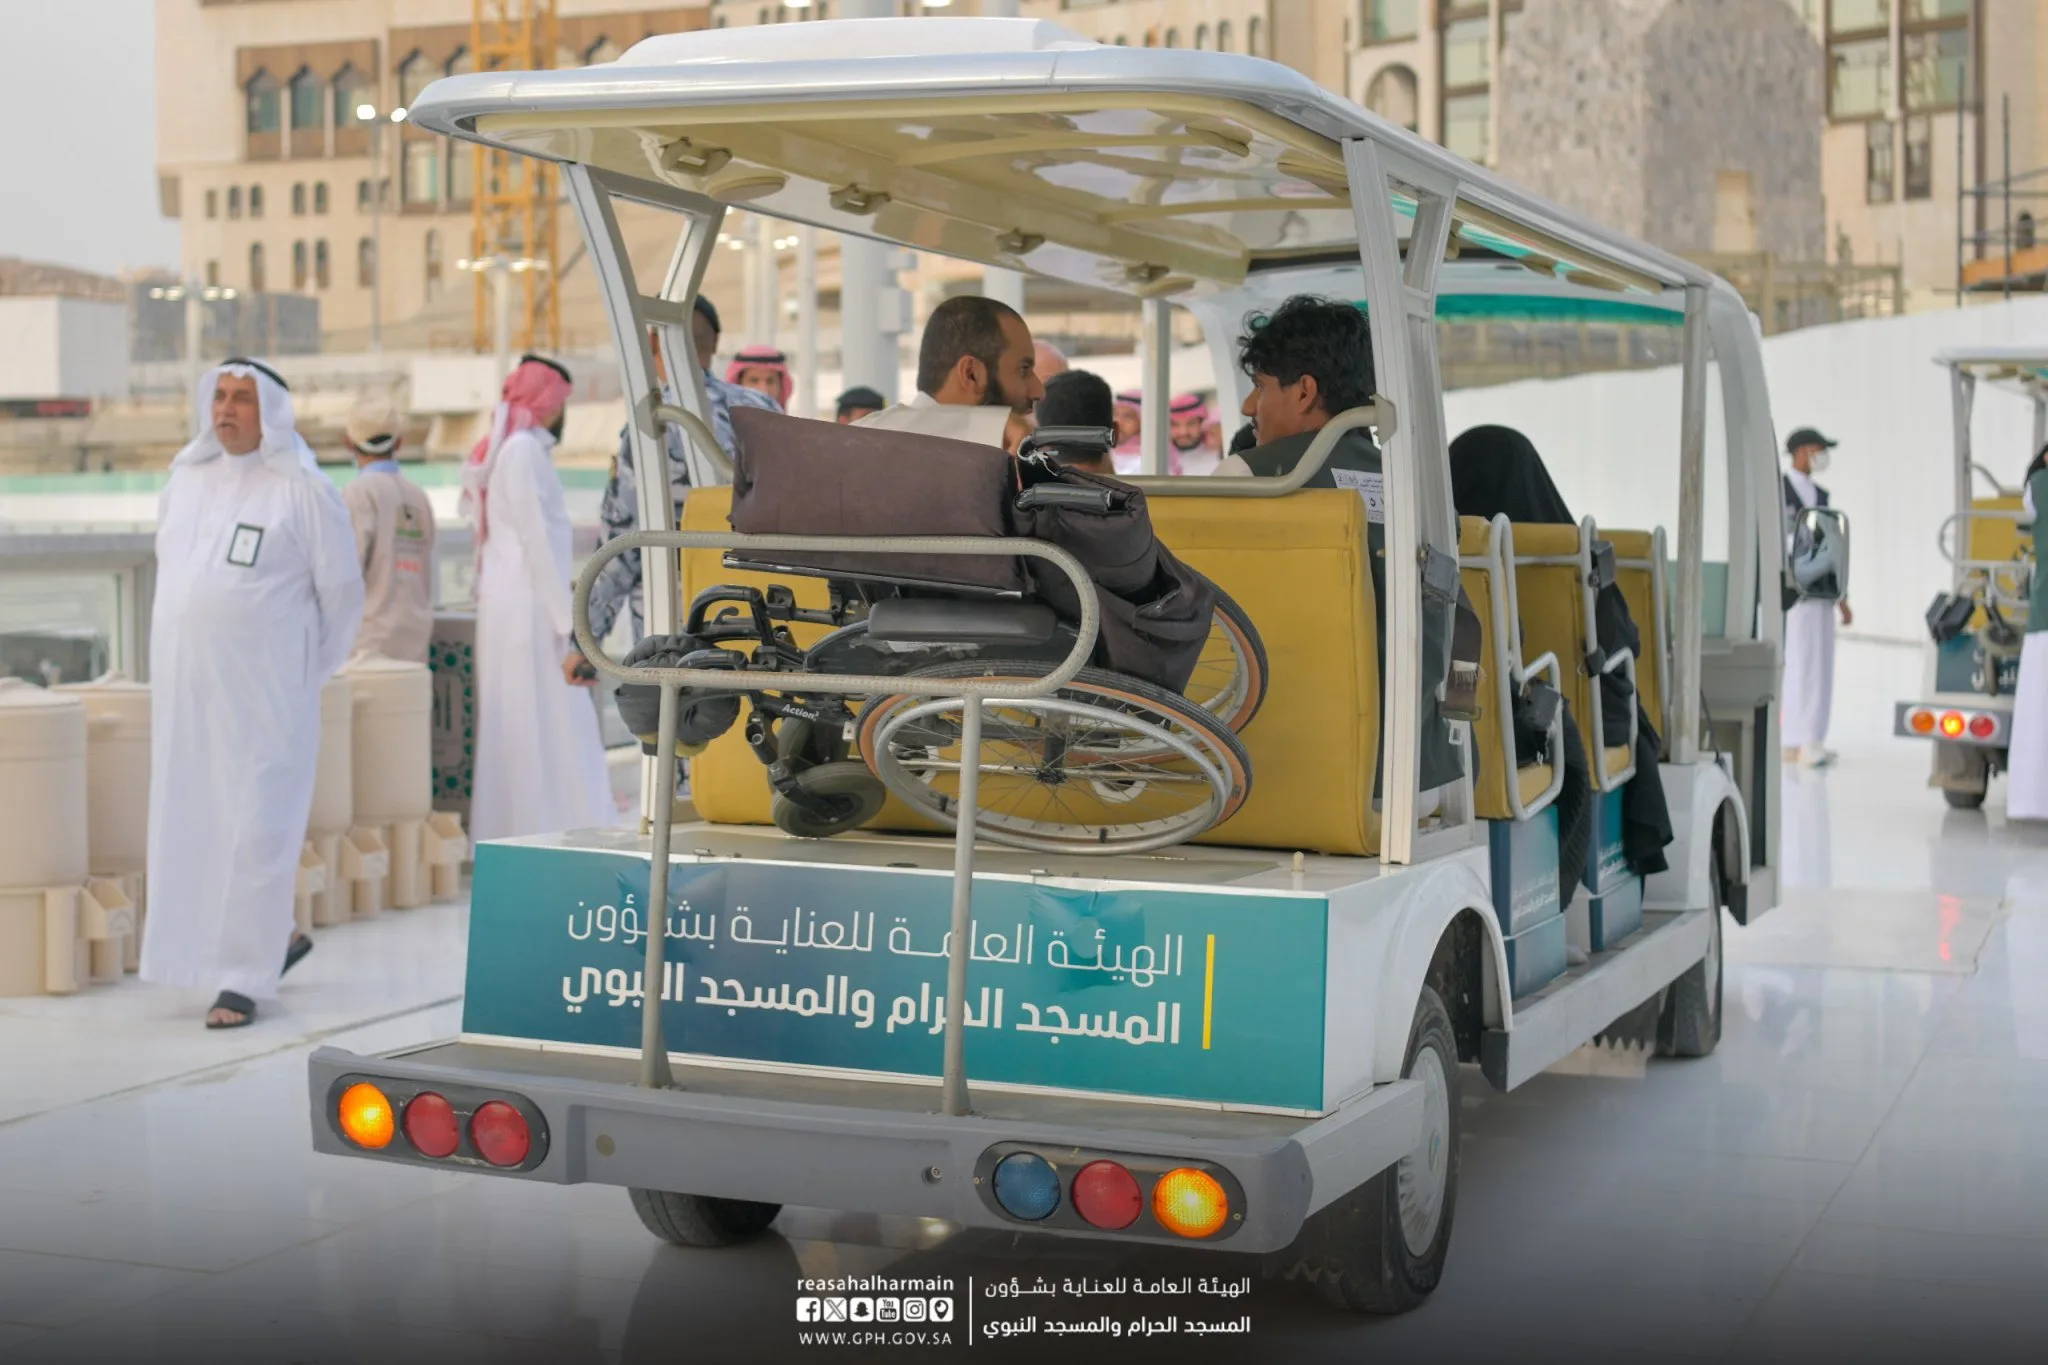 251 golf carts to serve pilgrims in Mecca